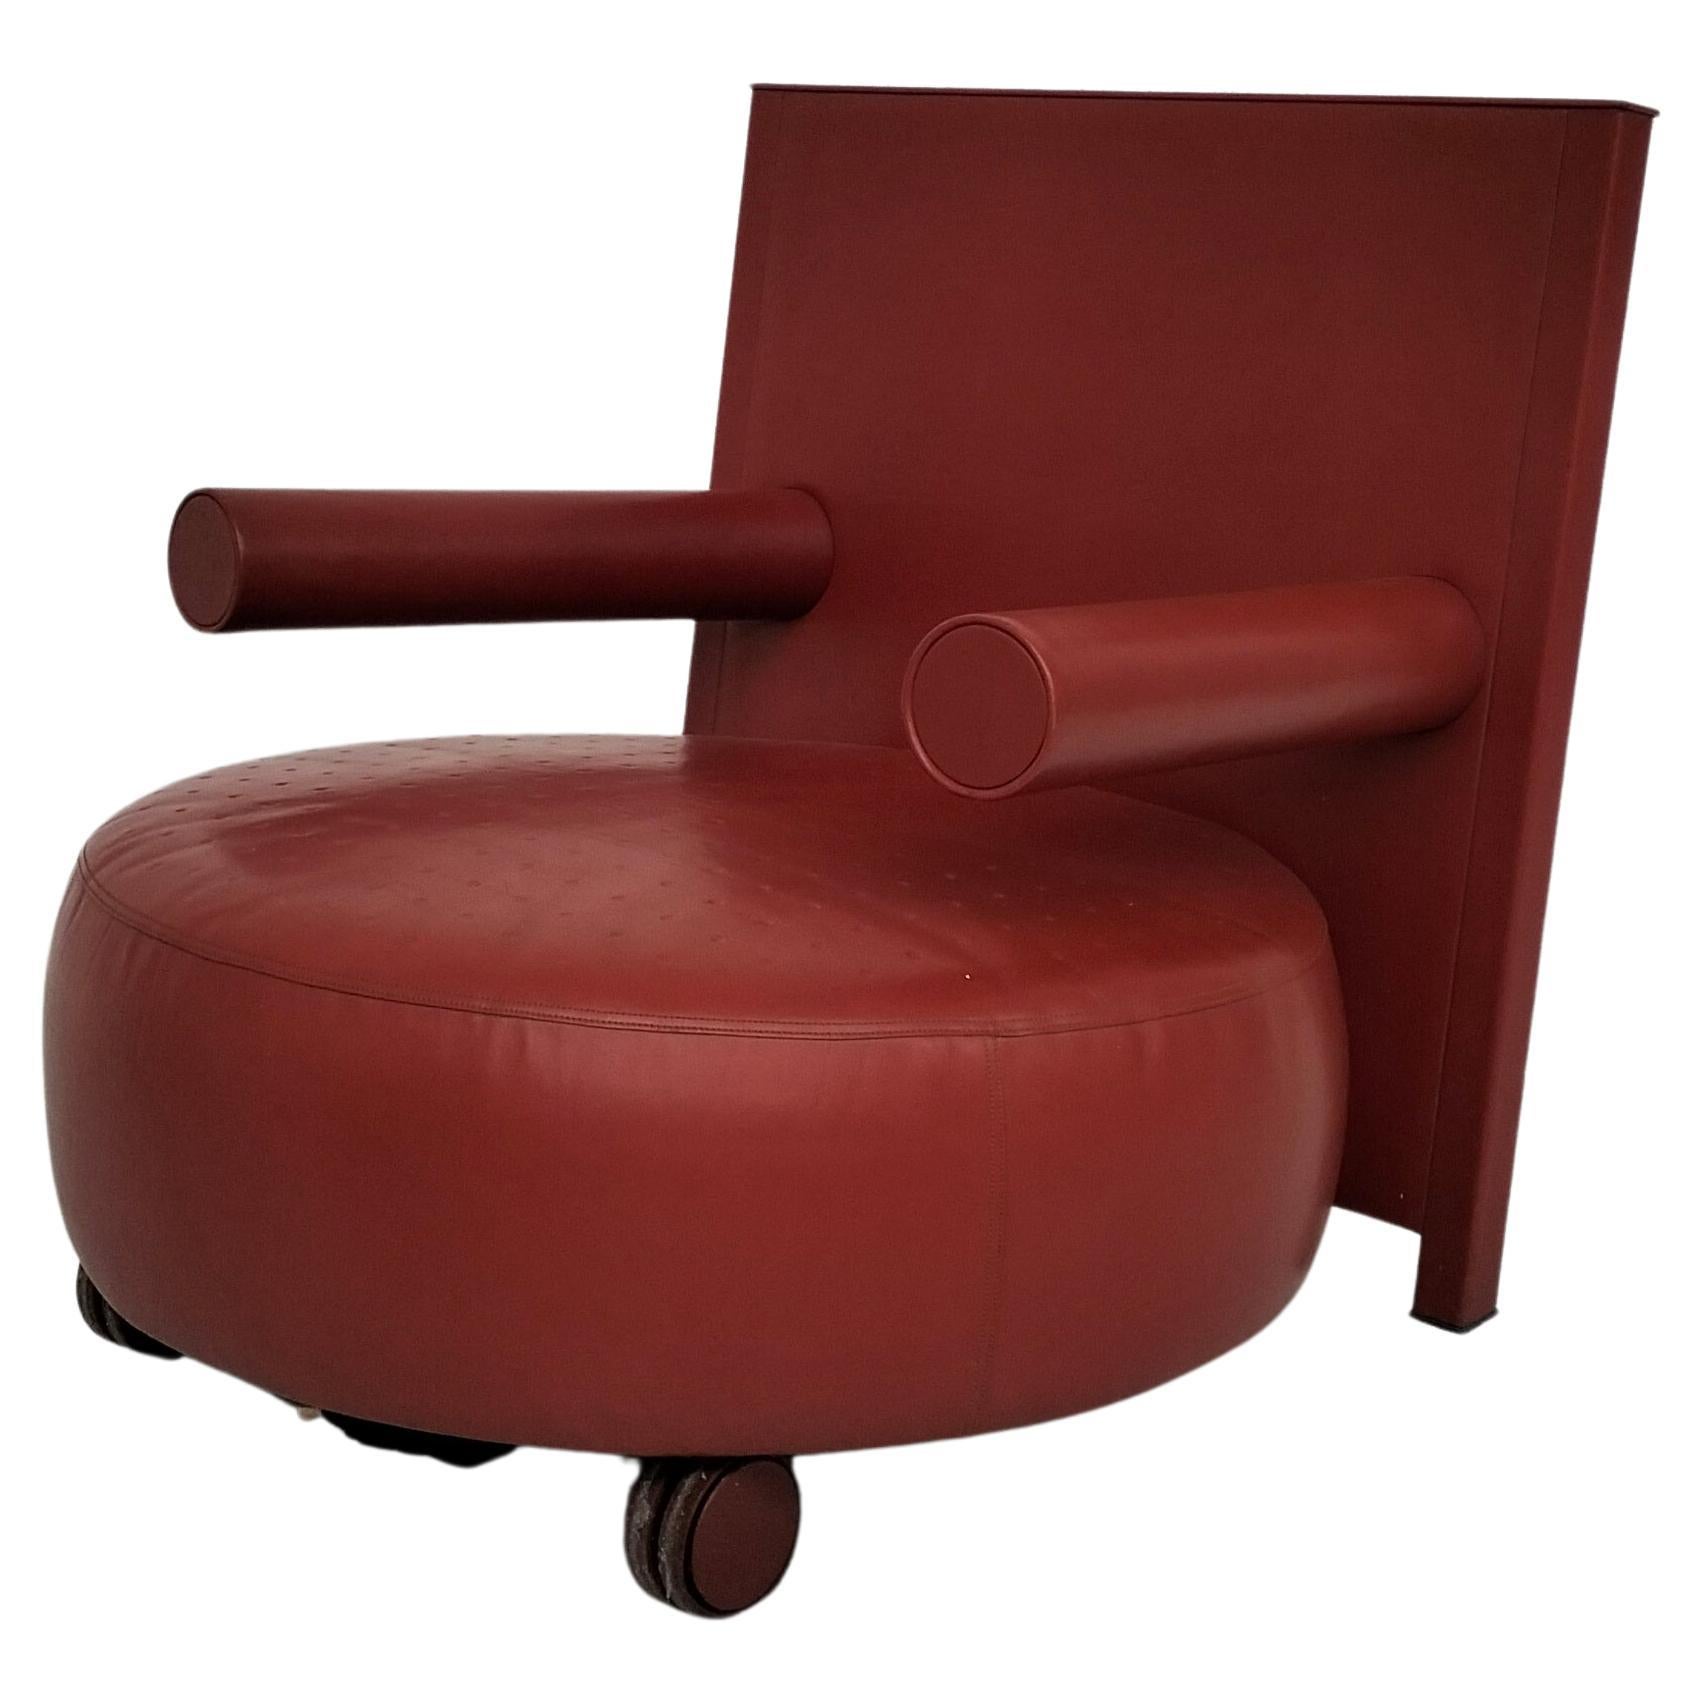 Baisity leather armchair by Antonio Citterio for B&B Italia - 1980’s